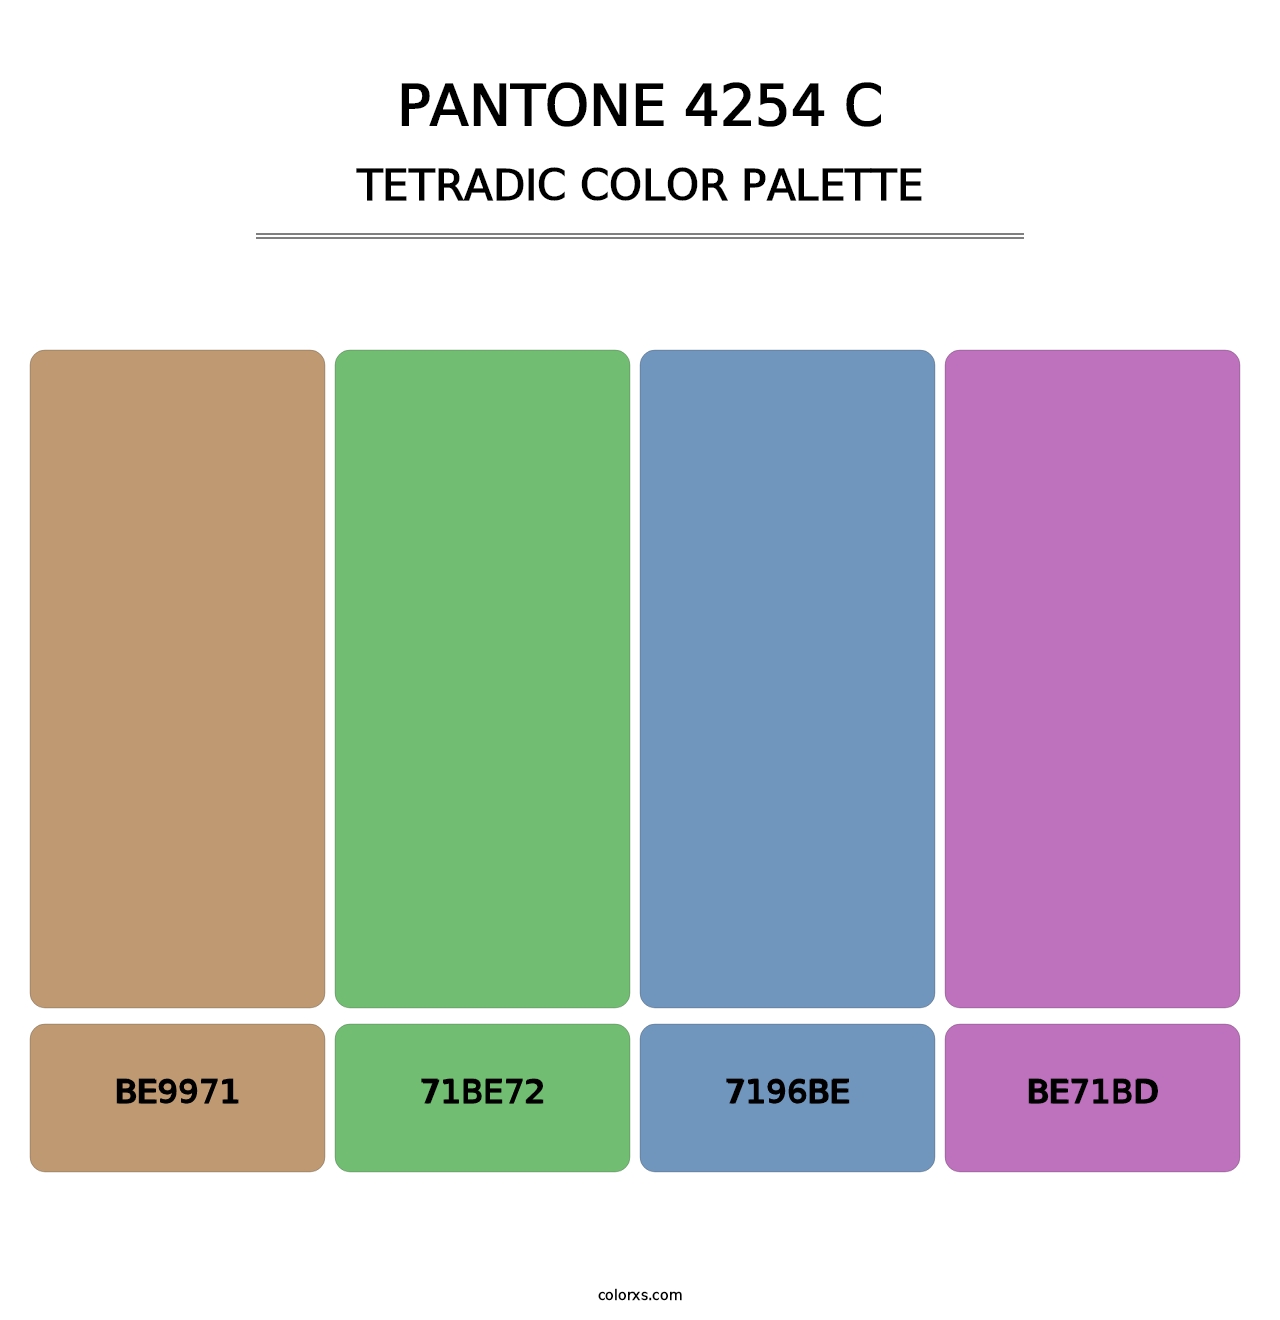 PANTONE 4254 C - Tetradic Color Palette